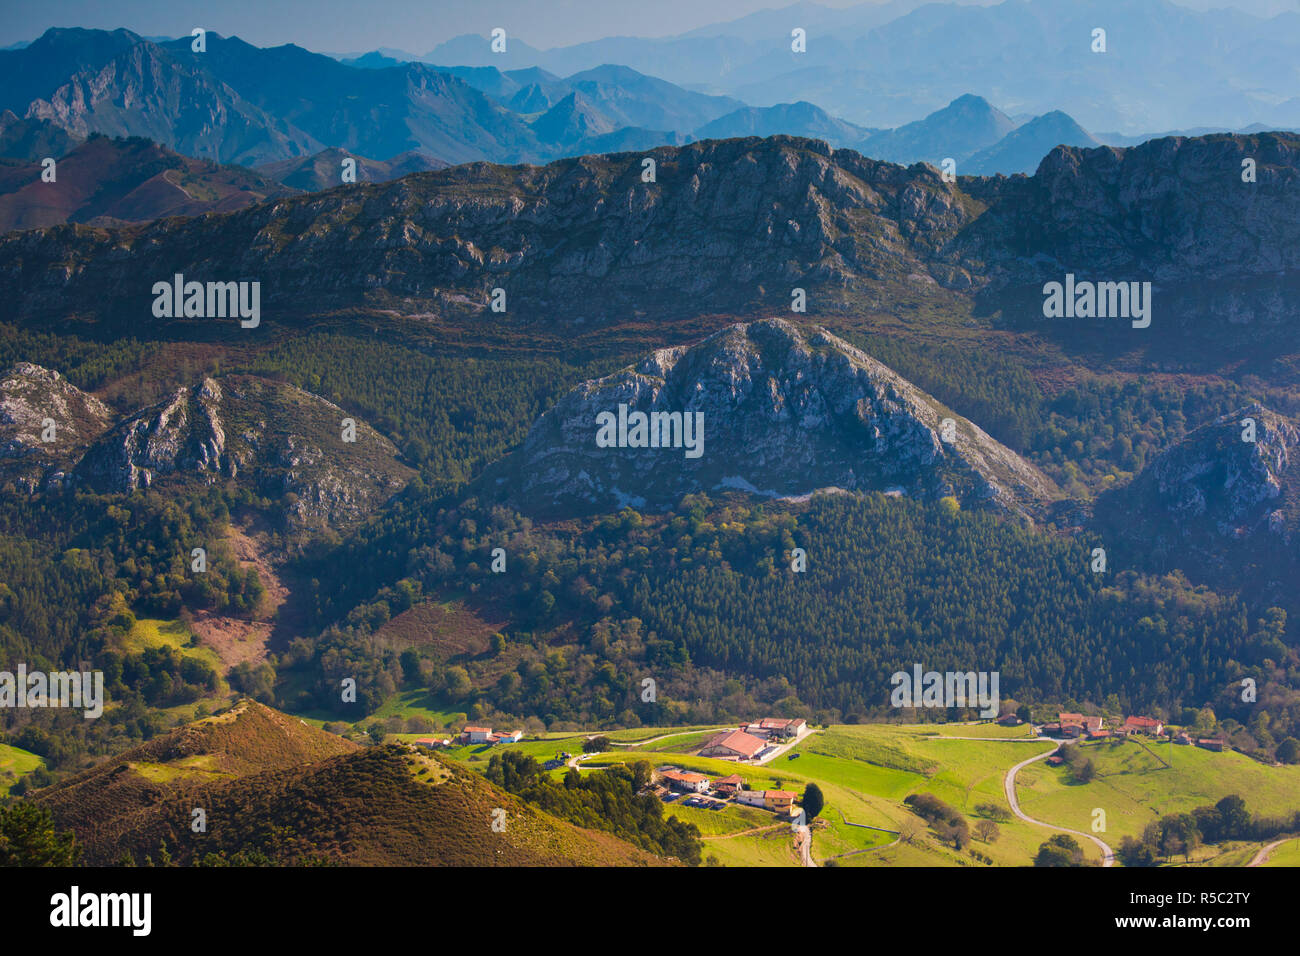 Spain, Asturias Region, Asturias Province, Mirador del Fito, elevated view of the Picos de Europa Stock Photo